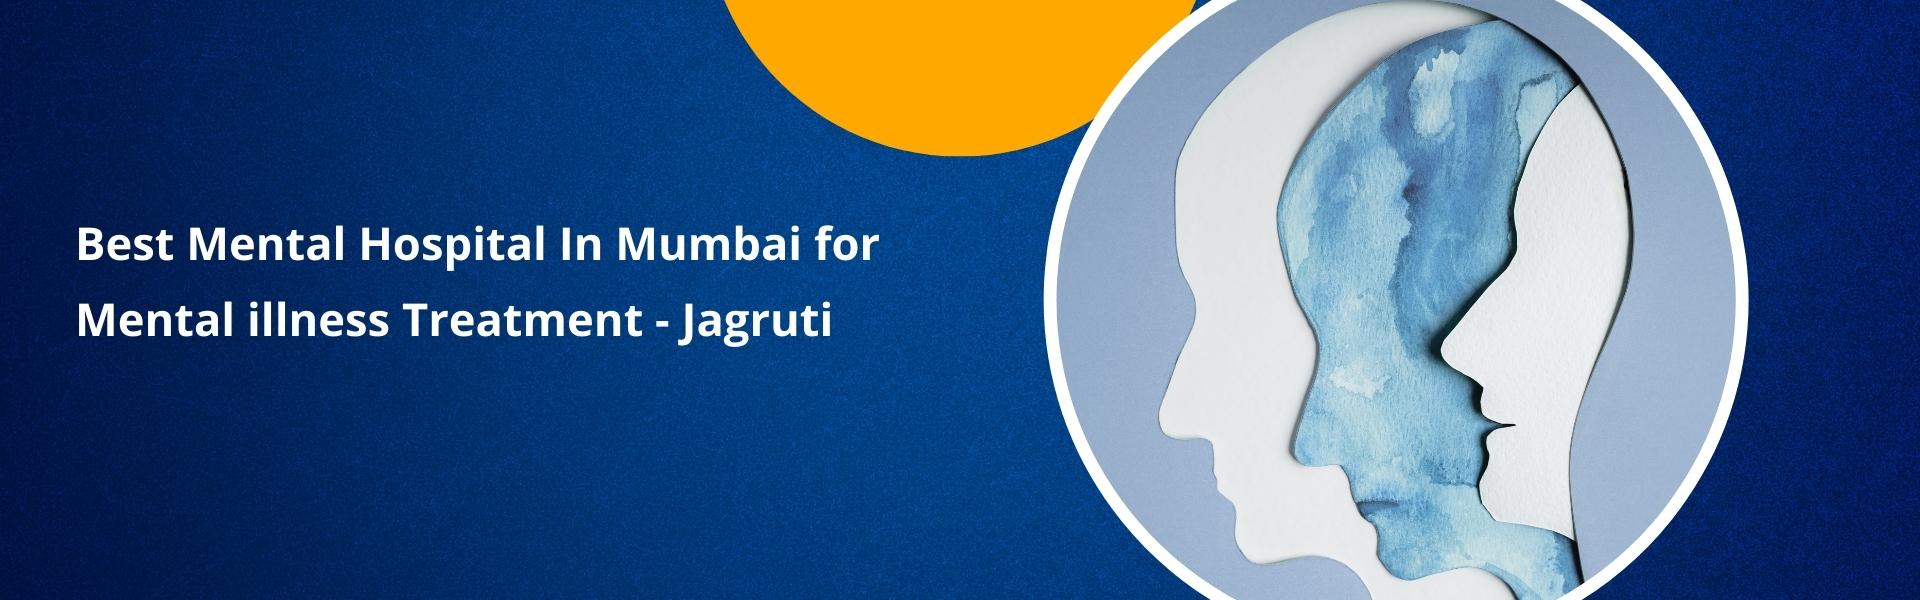 Mumbai Xxx Sleeping Com - Best Mental Hospital in Mumbai for Mental Health - Jagruti